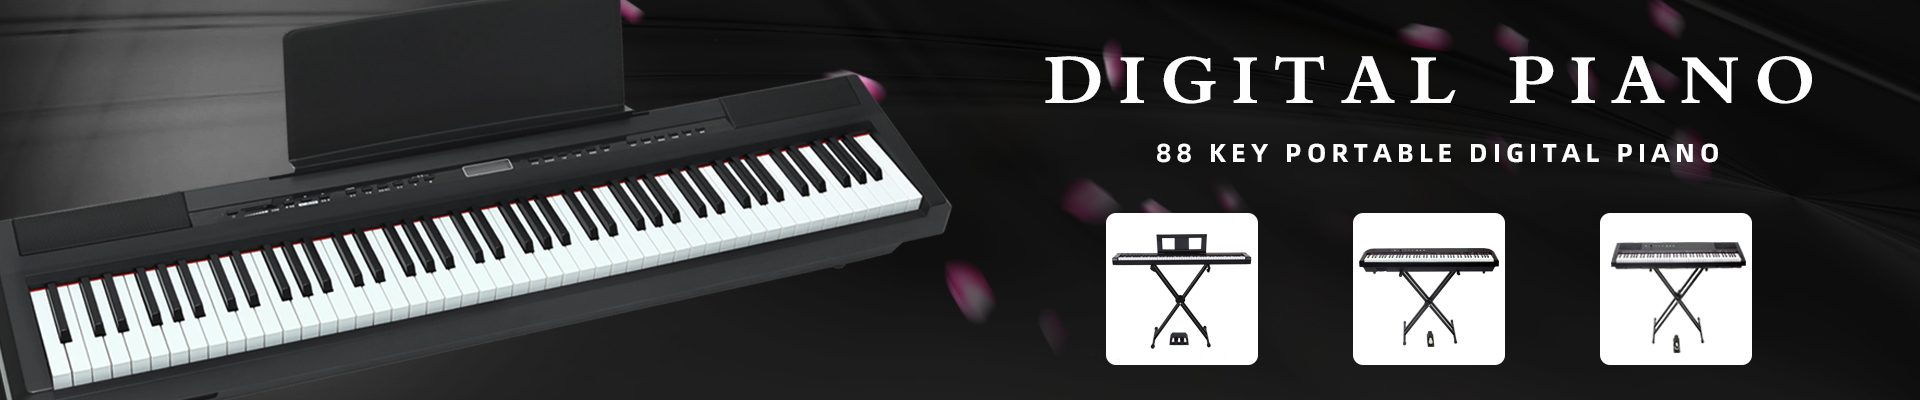 88-Key Portable Digital Piano